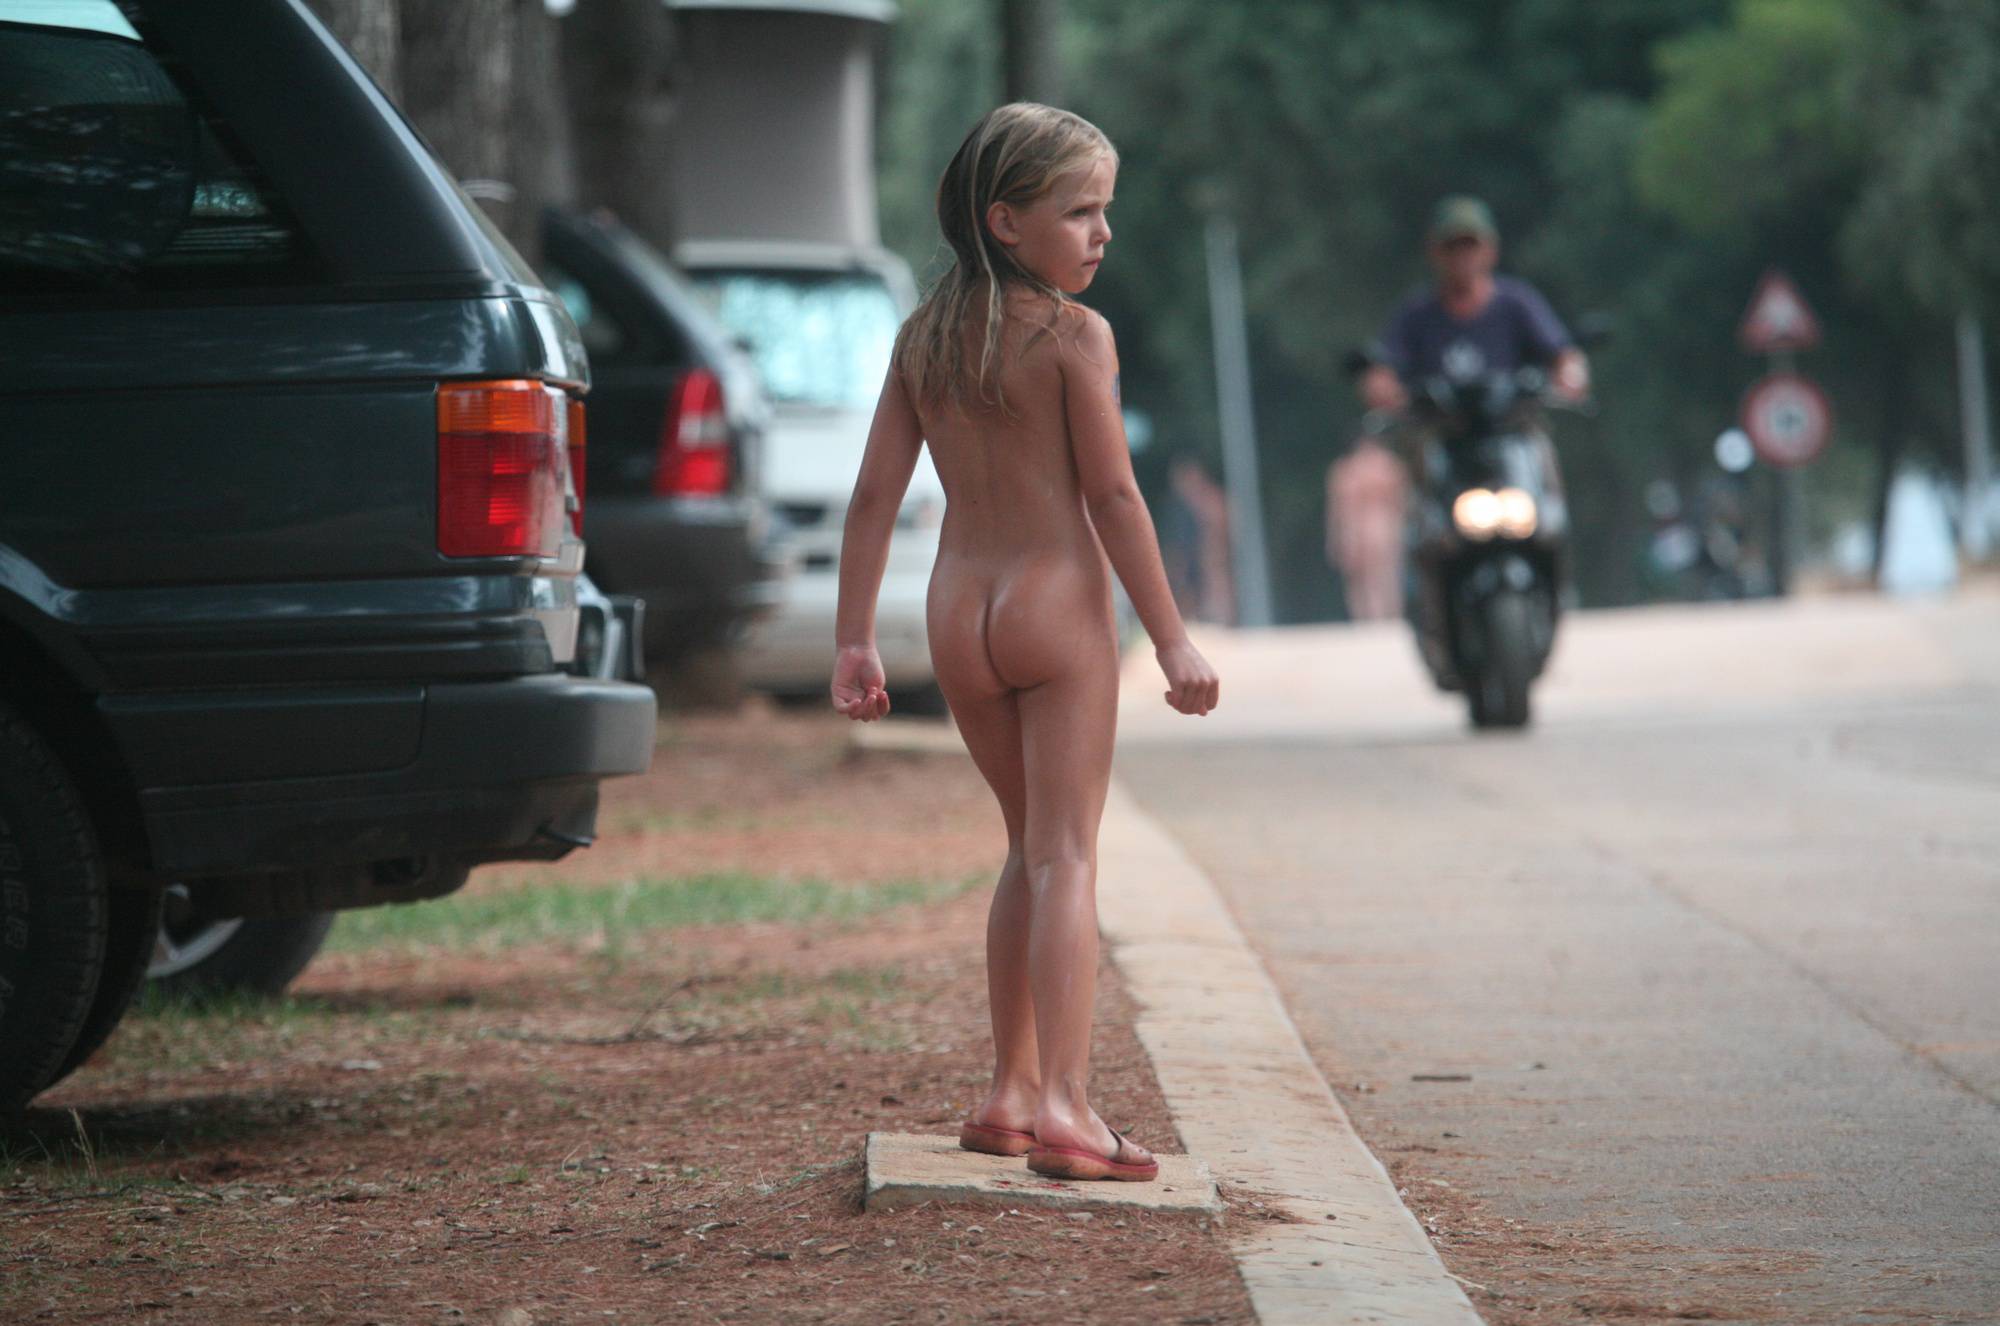 Purenudism Naturist Child on Sidewalk - 2